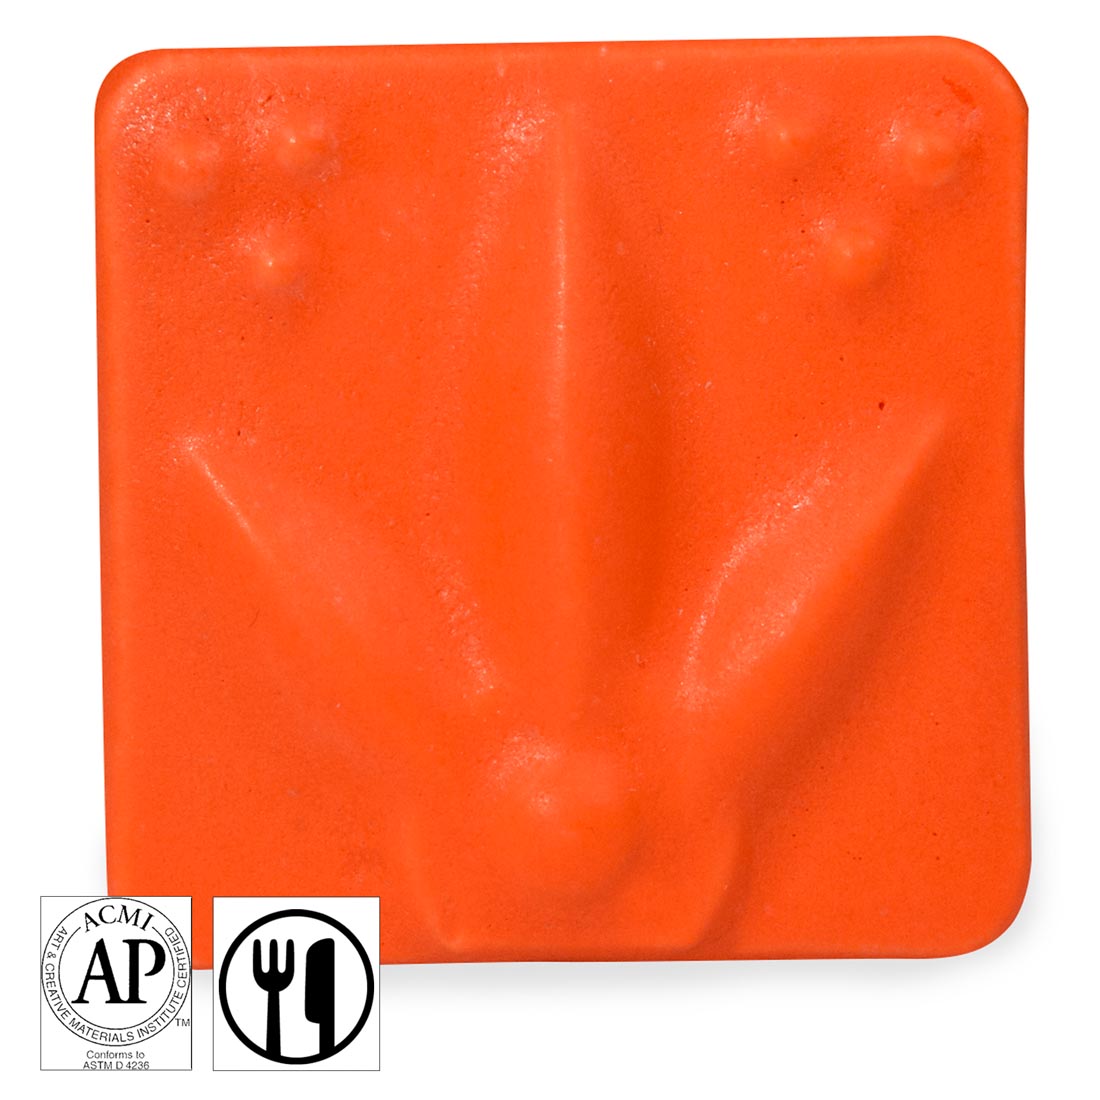 clay tile with Orange AMACO Satin Matte Glaze applied; symbols for AP Seal and food safe